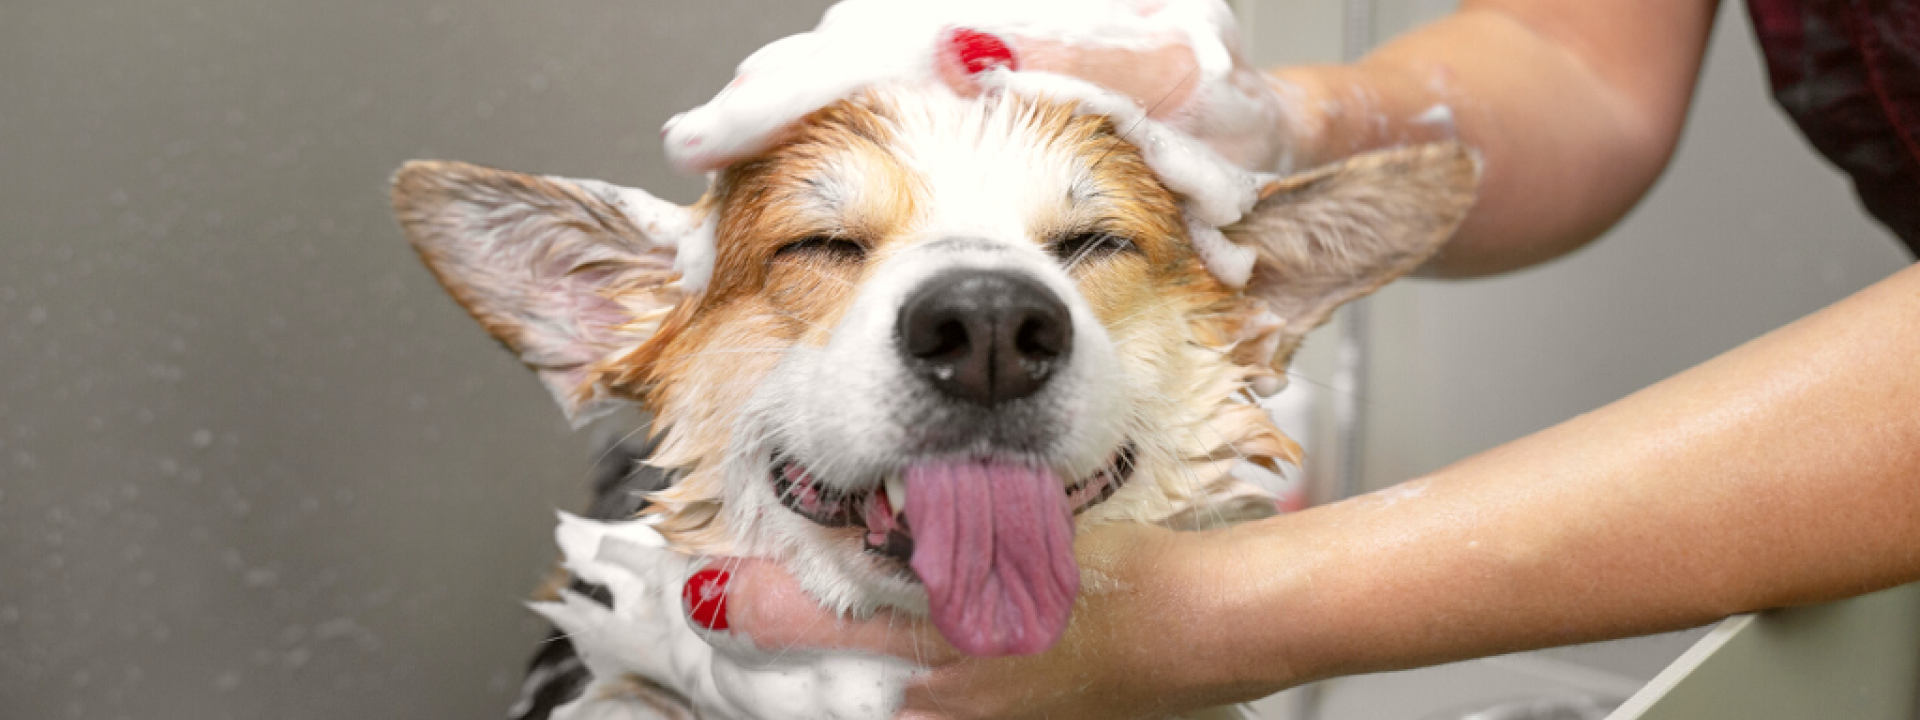 Dog taking a bubble bath in grooming salon.